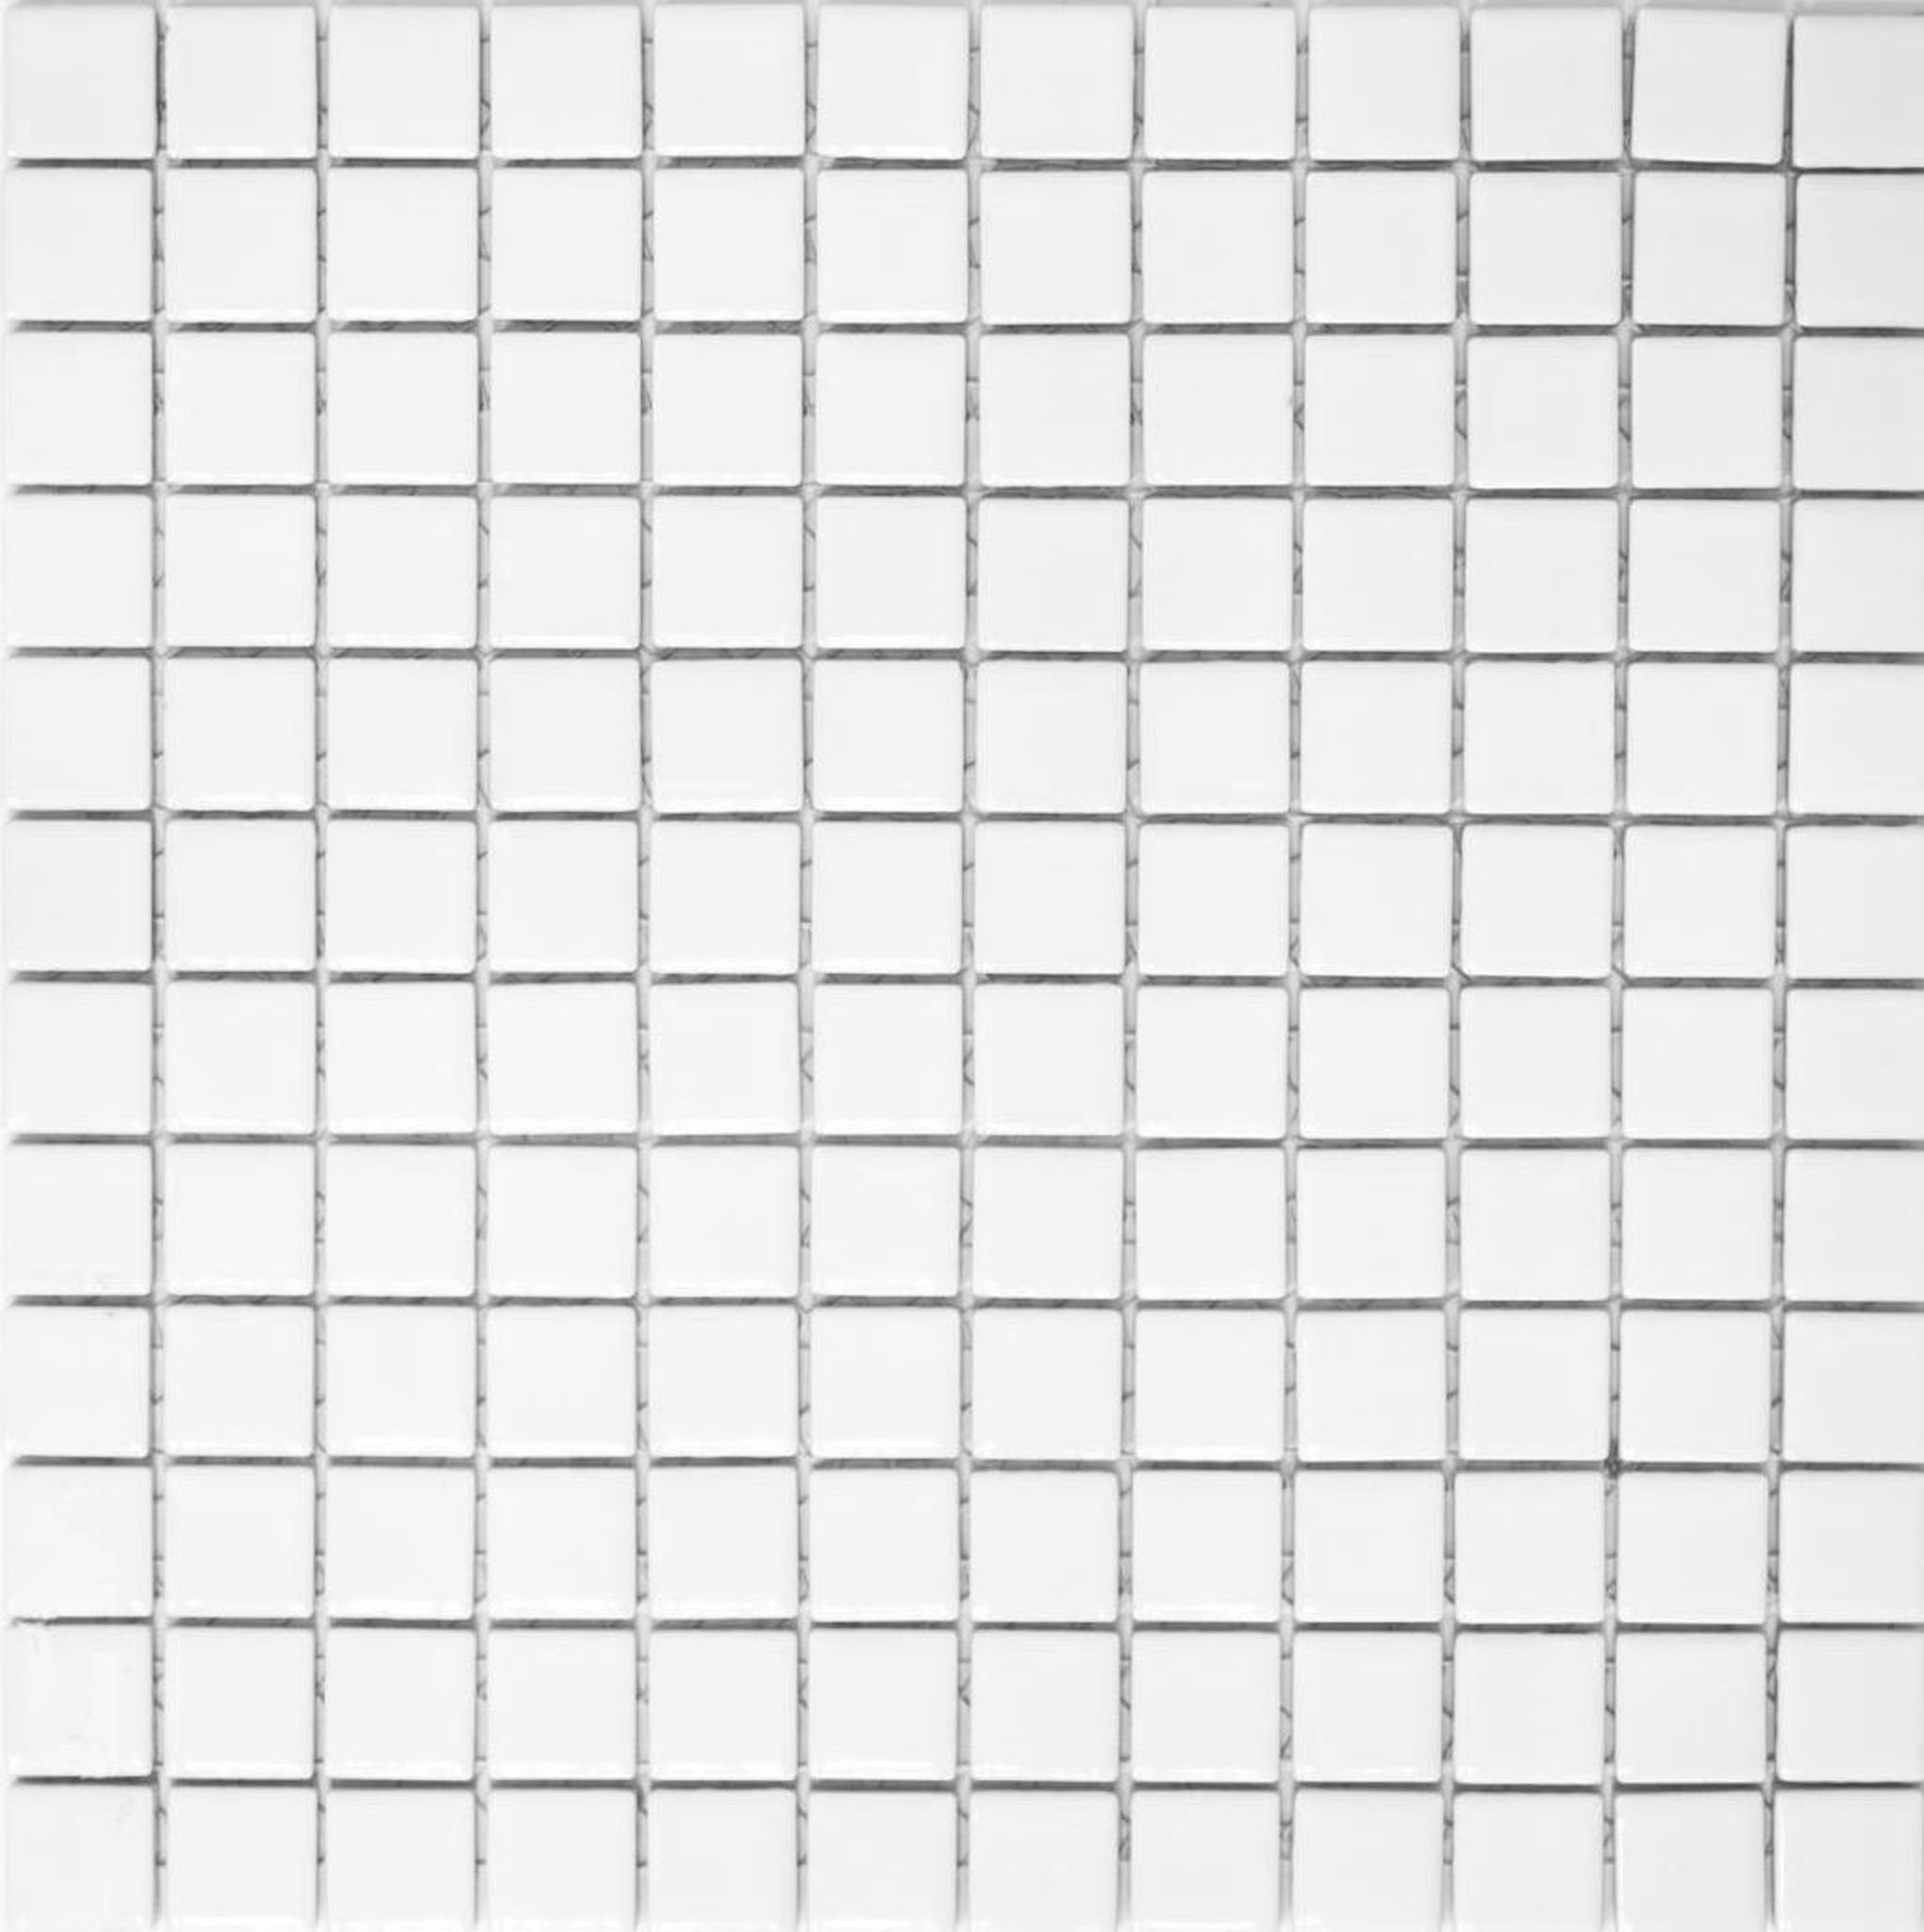 Mosani Mosaikfliesen Quadratisches Keramikmosaik Mosaikfliesen 10 Matten / matt weiß